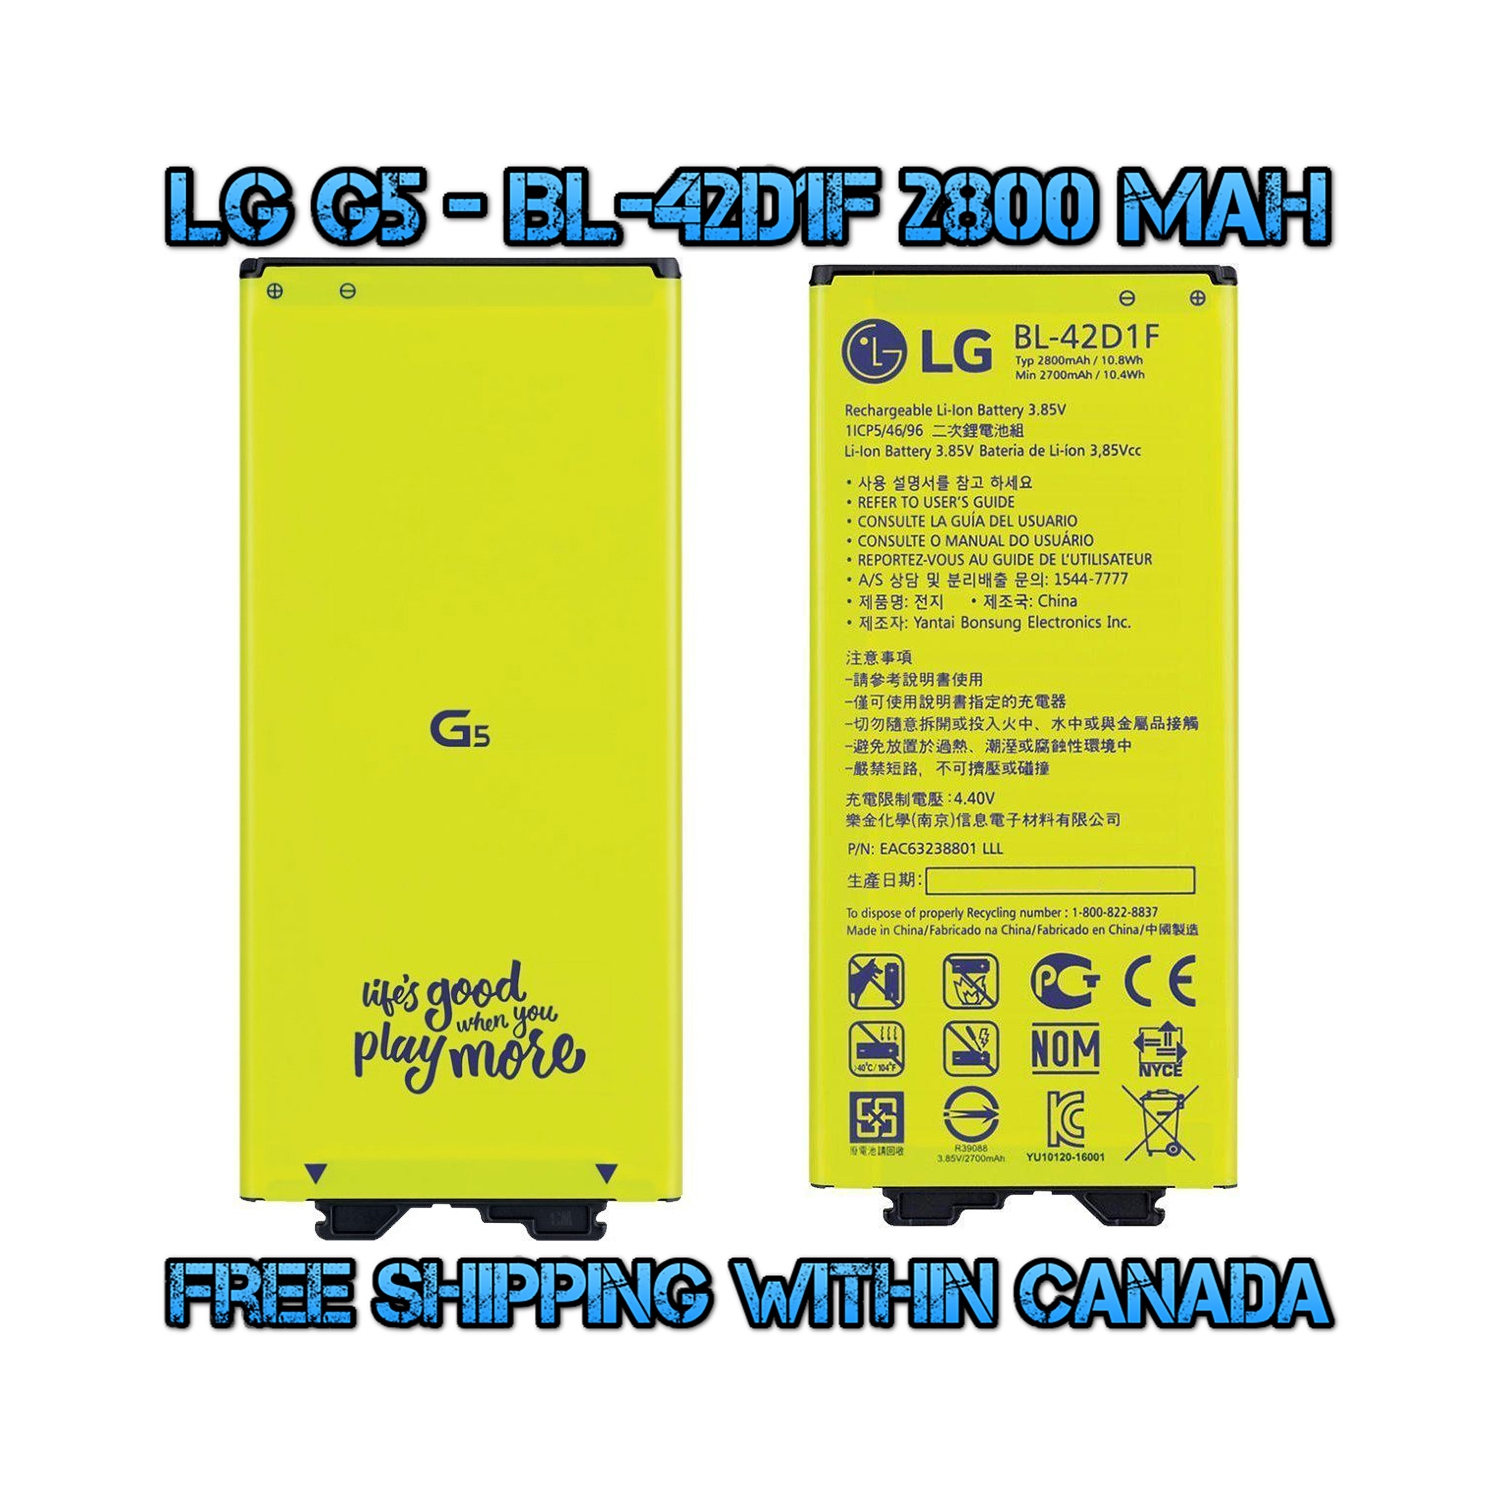 Original LG G5 BL-42D1F 2800 mAh Battery for model H820 H831 H840 H850 H860 H868